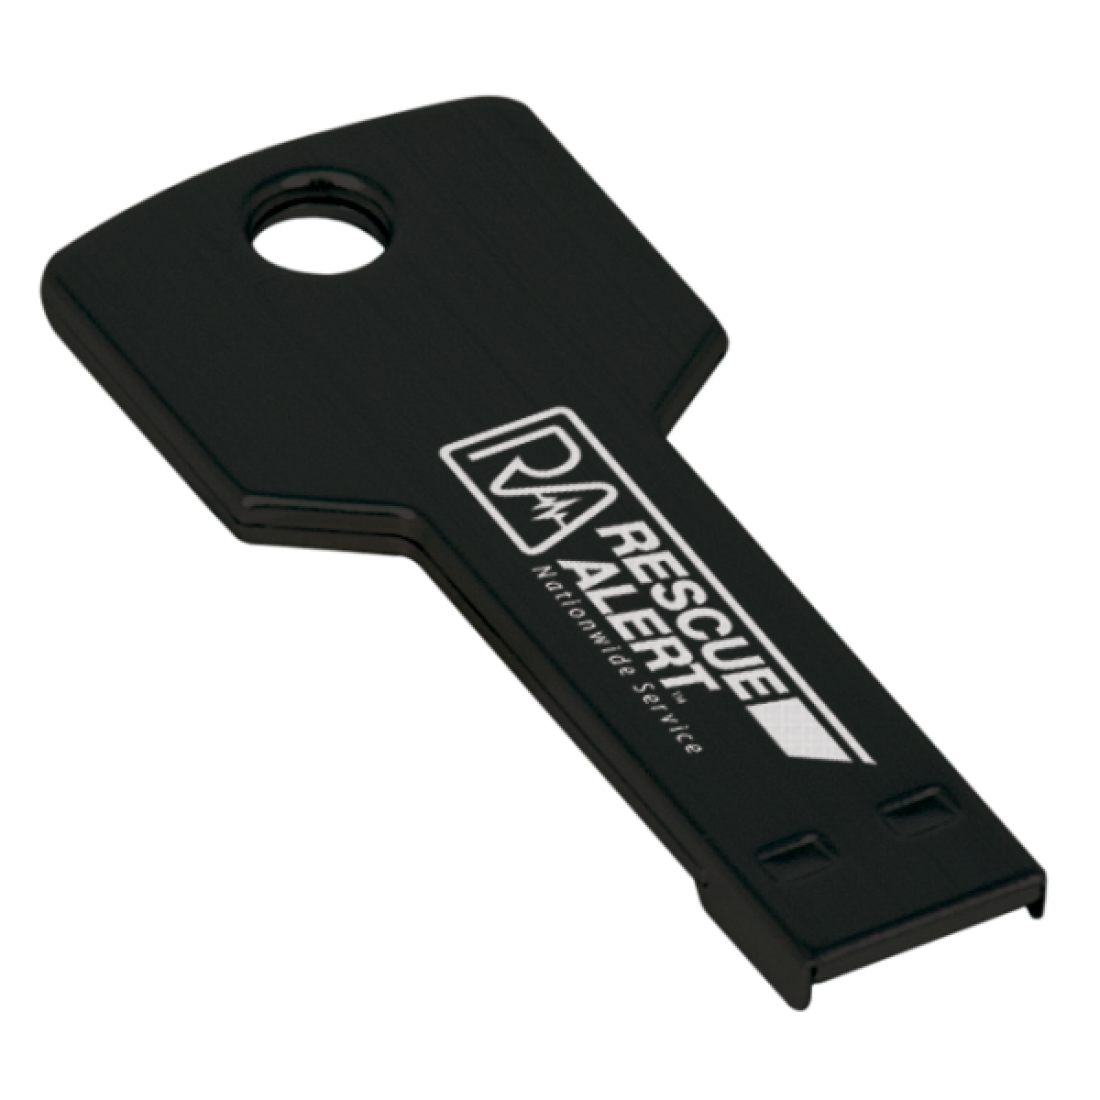 Flash ключ. Флешка ключ. Юсб ключ. USB флешка ключ. Флешка с гравировкой.